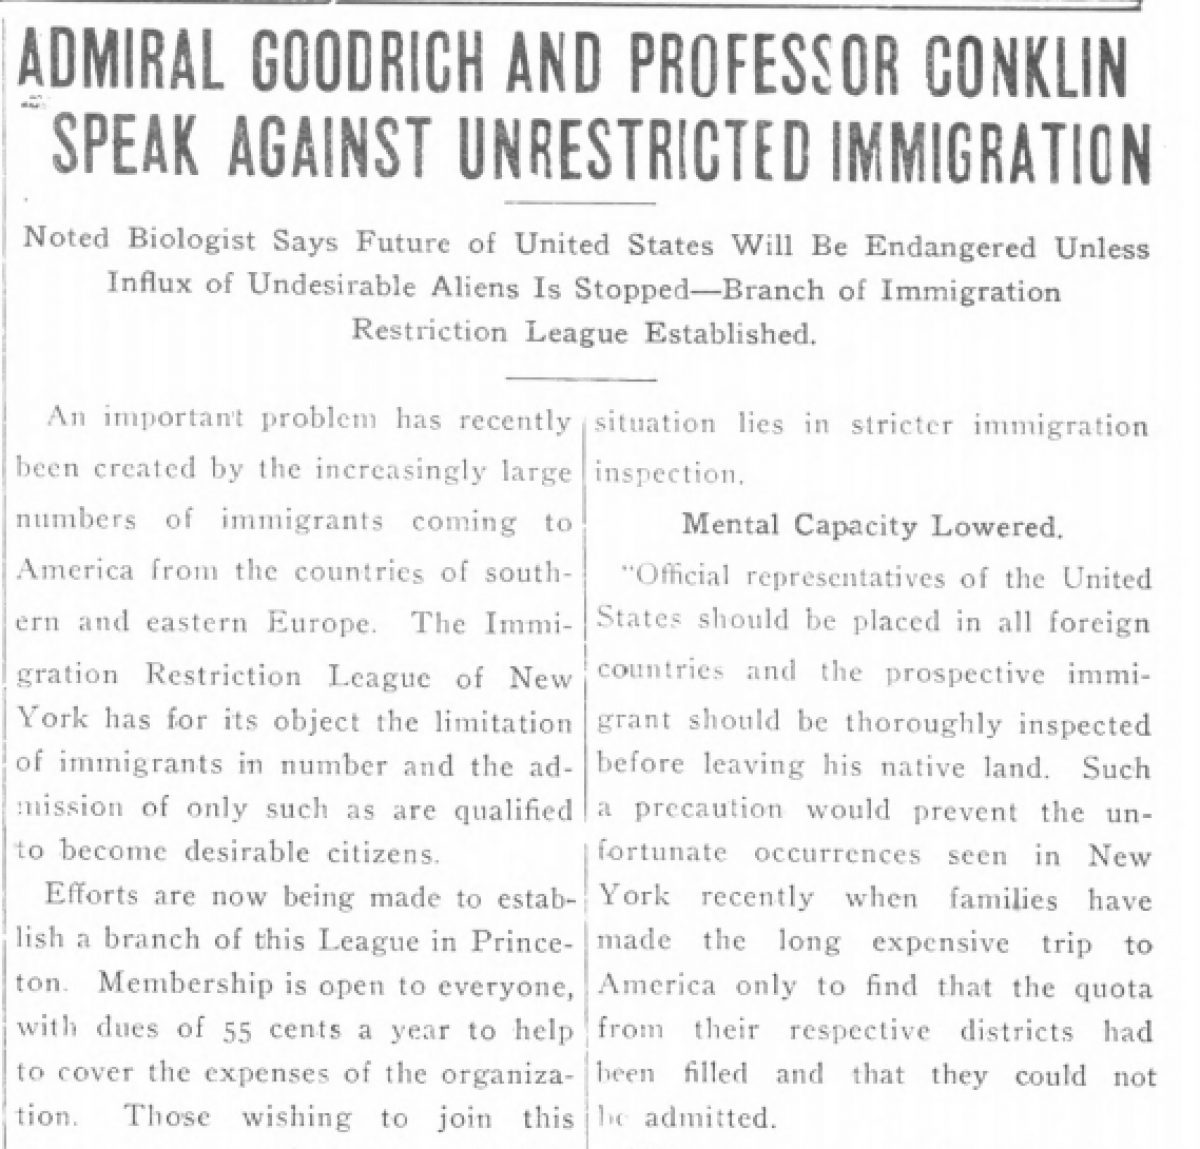 "Admiral Goodrich and Professor Conklin Speak Against Unrestricted Immigration"